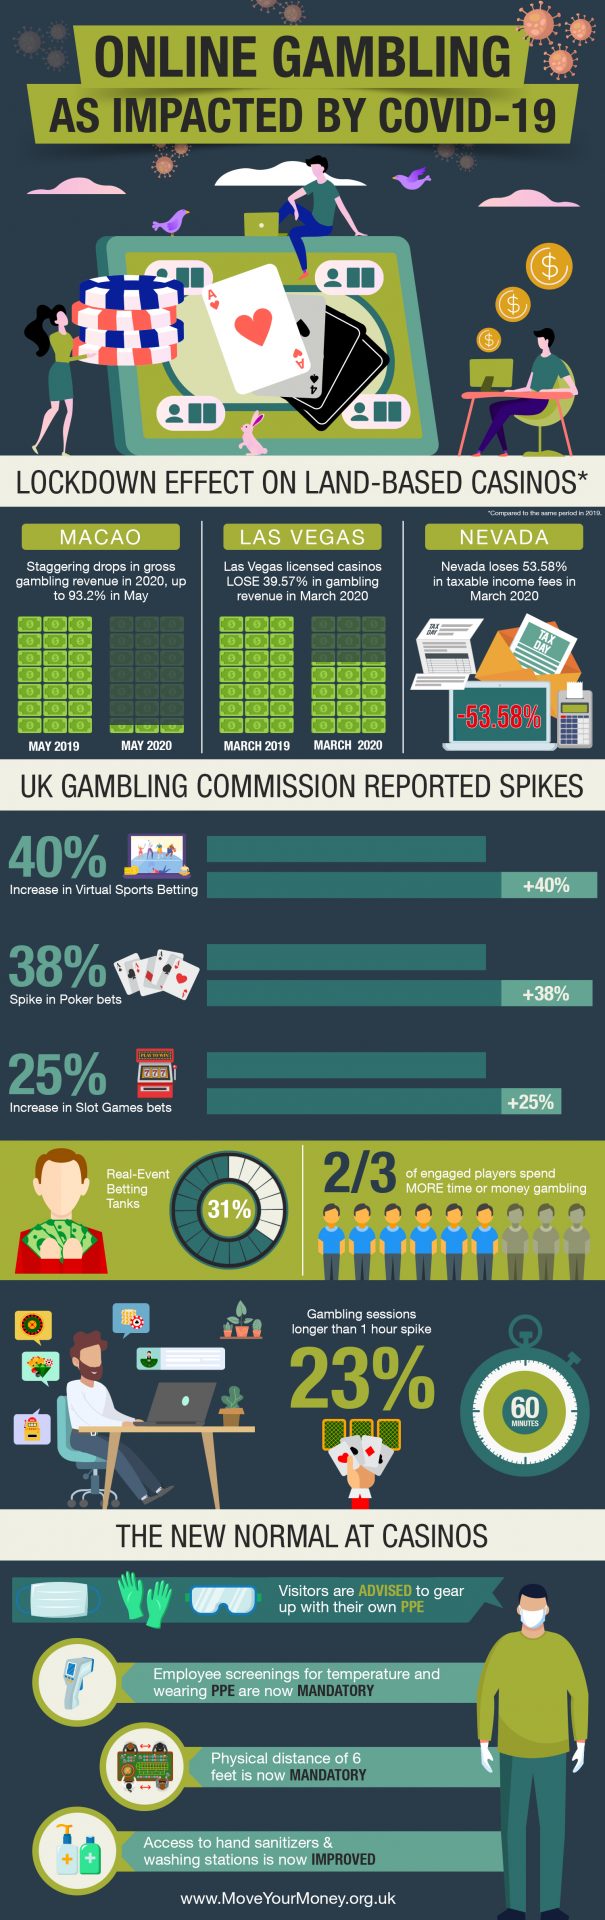 Online Gambling as Impacted by COVID0-19